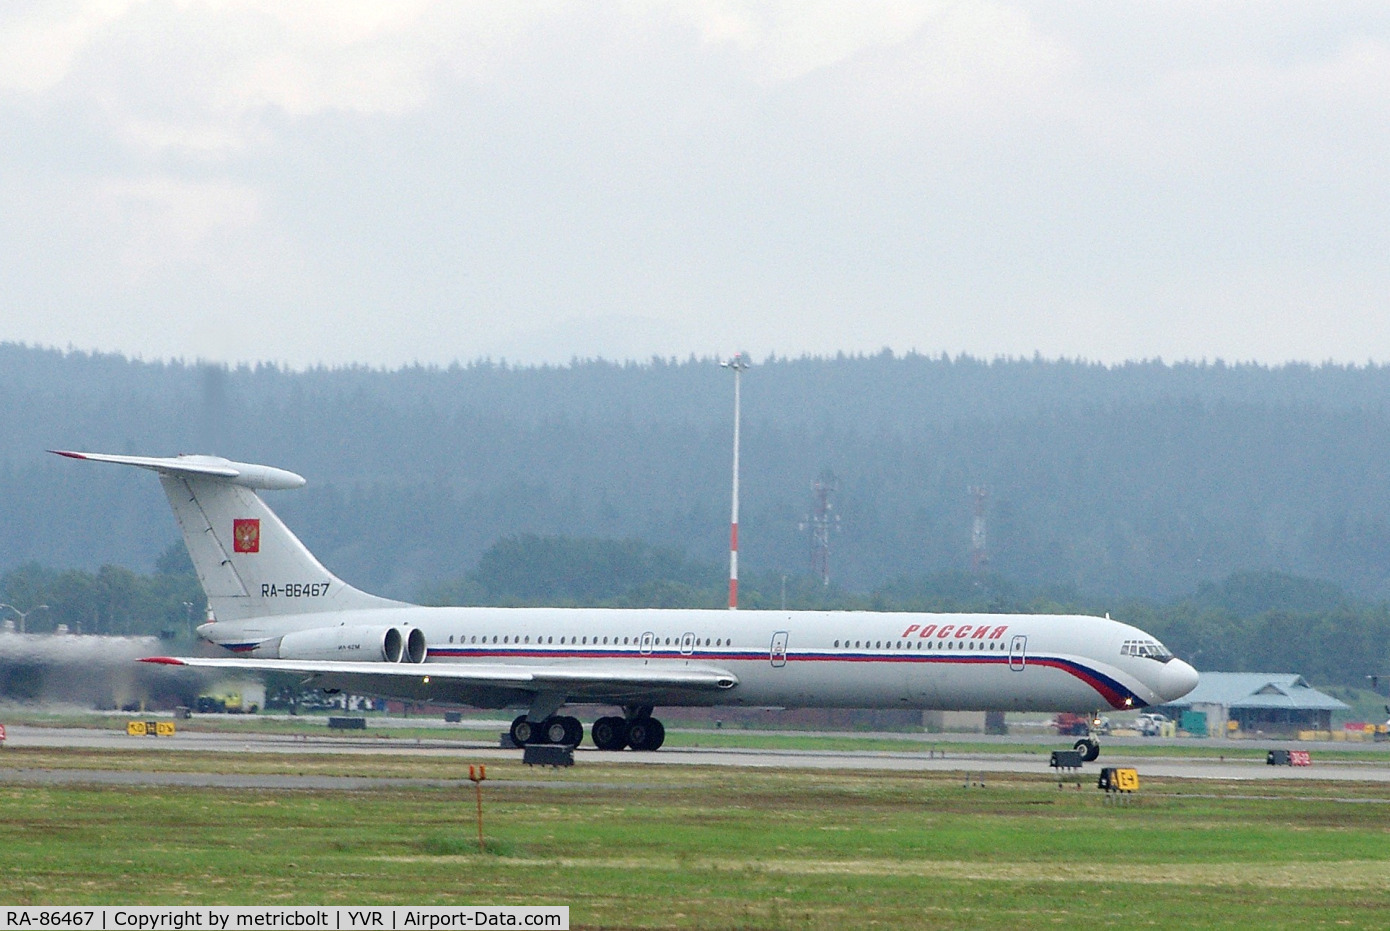 RA-86467, 1987 Ilyushin Il-62M C/N 3749733, take off from YVR